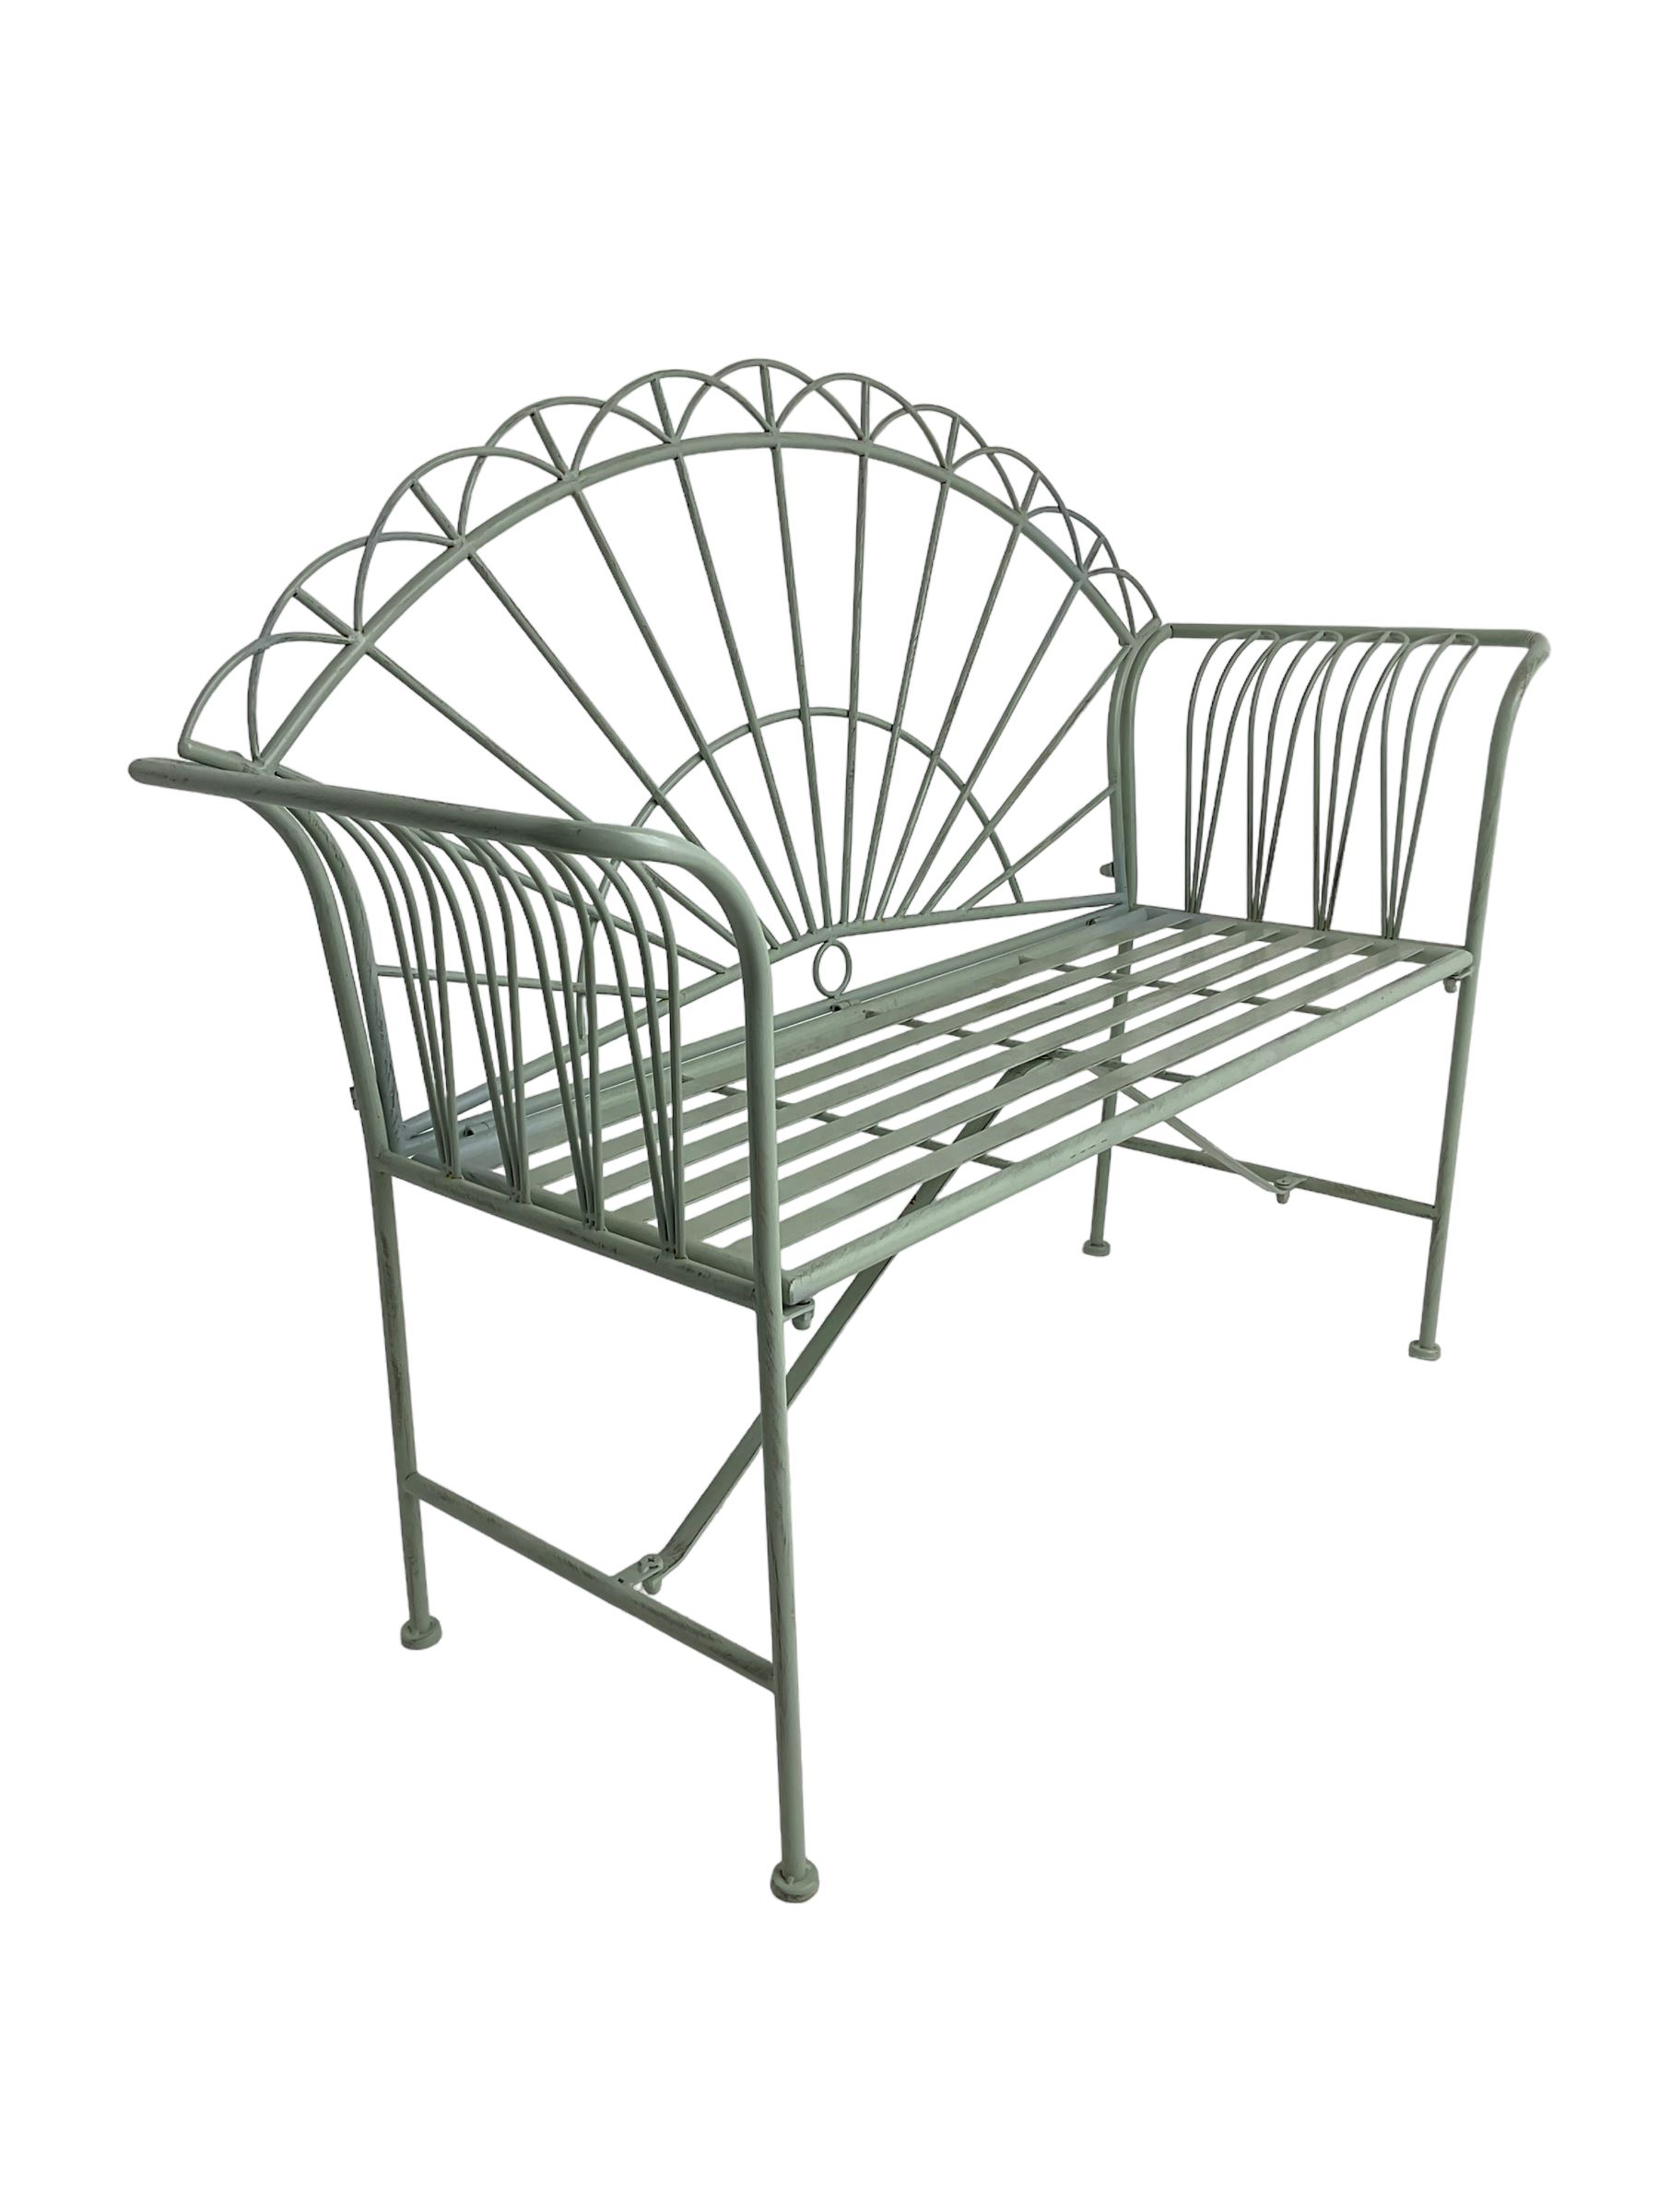 Regency design wrought metal bench - Image 3 of 6